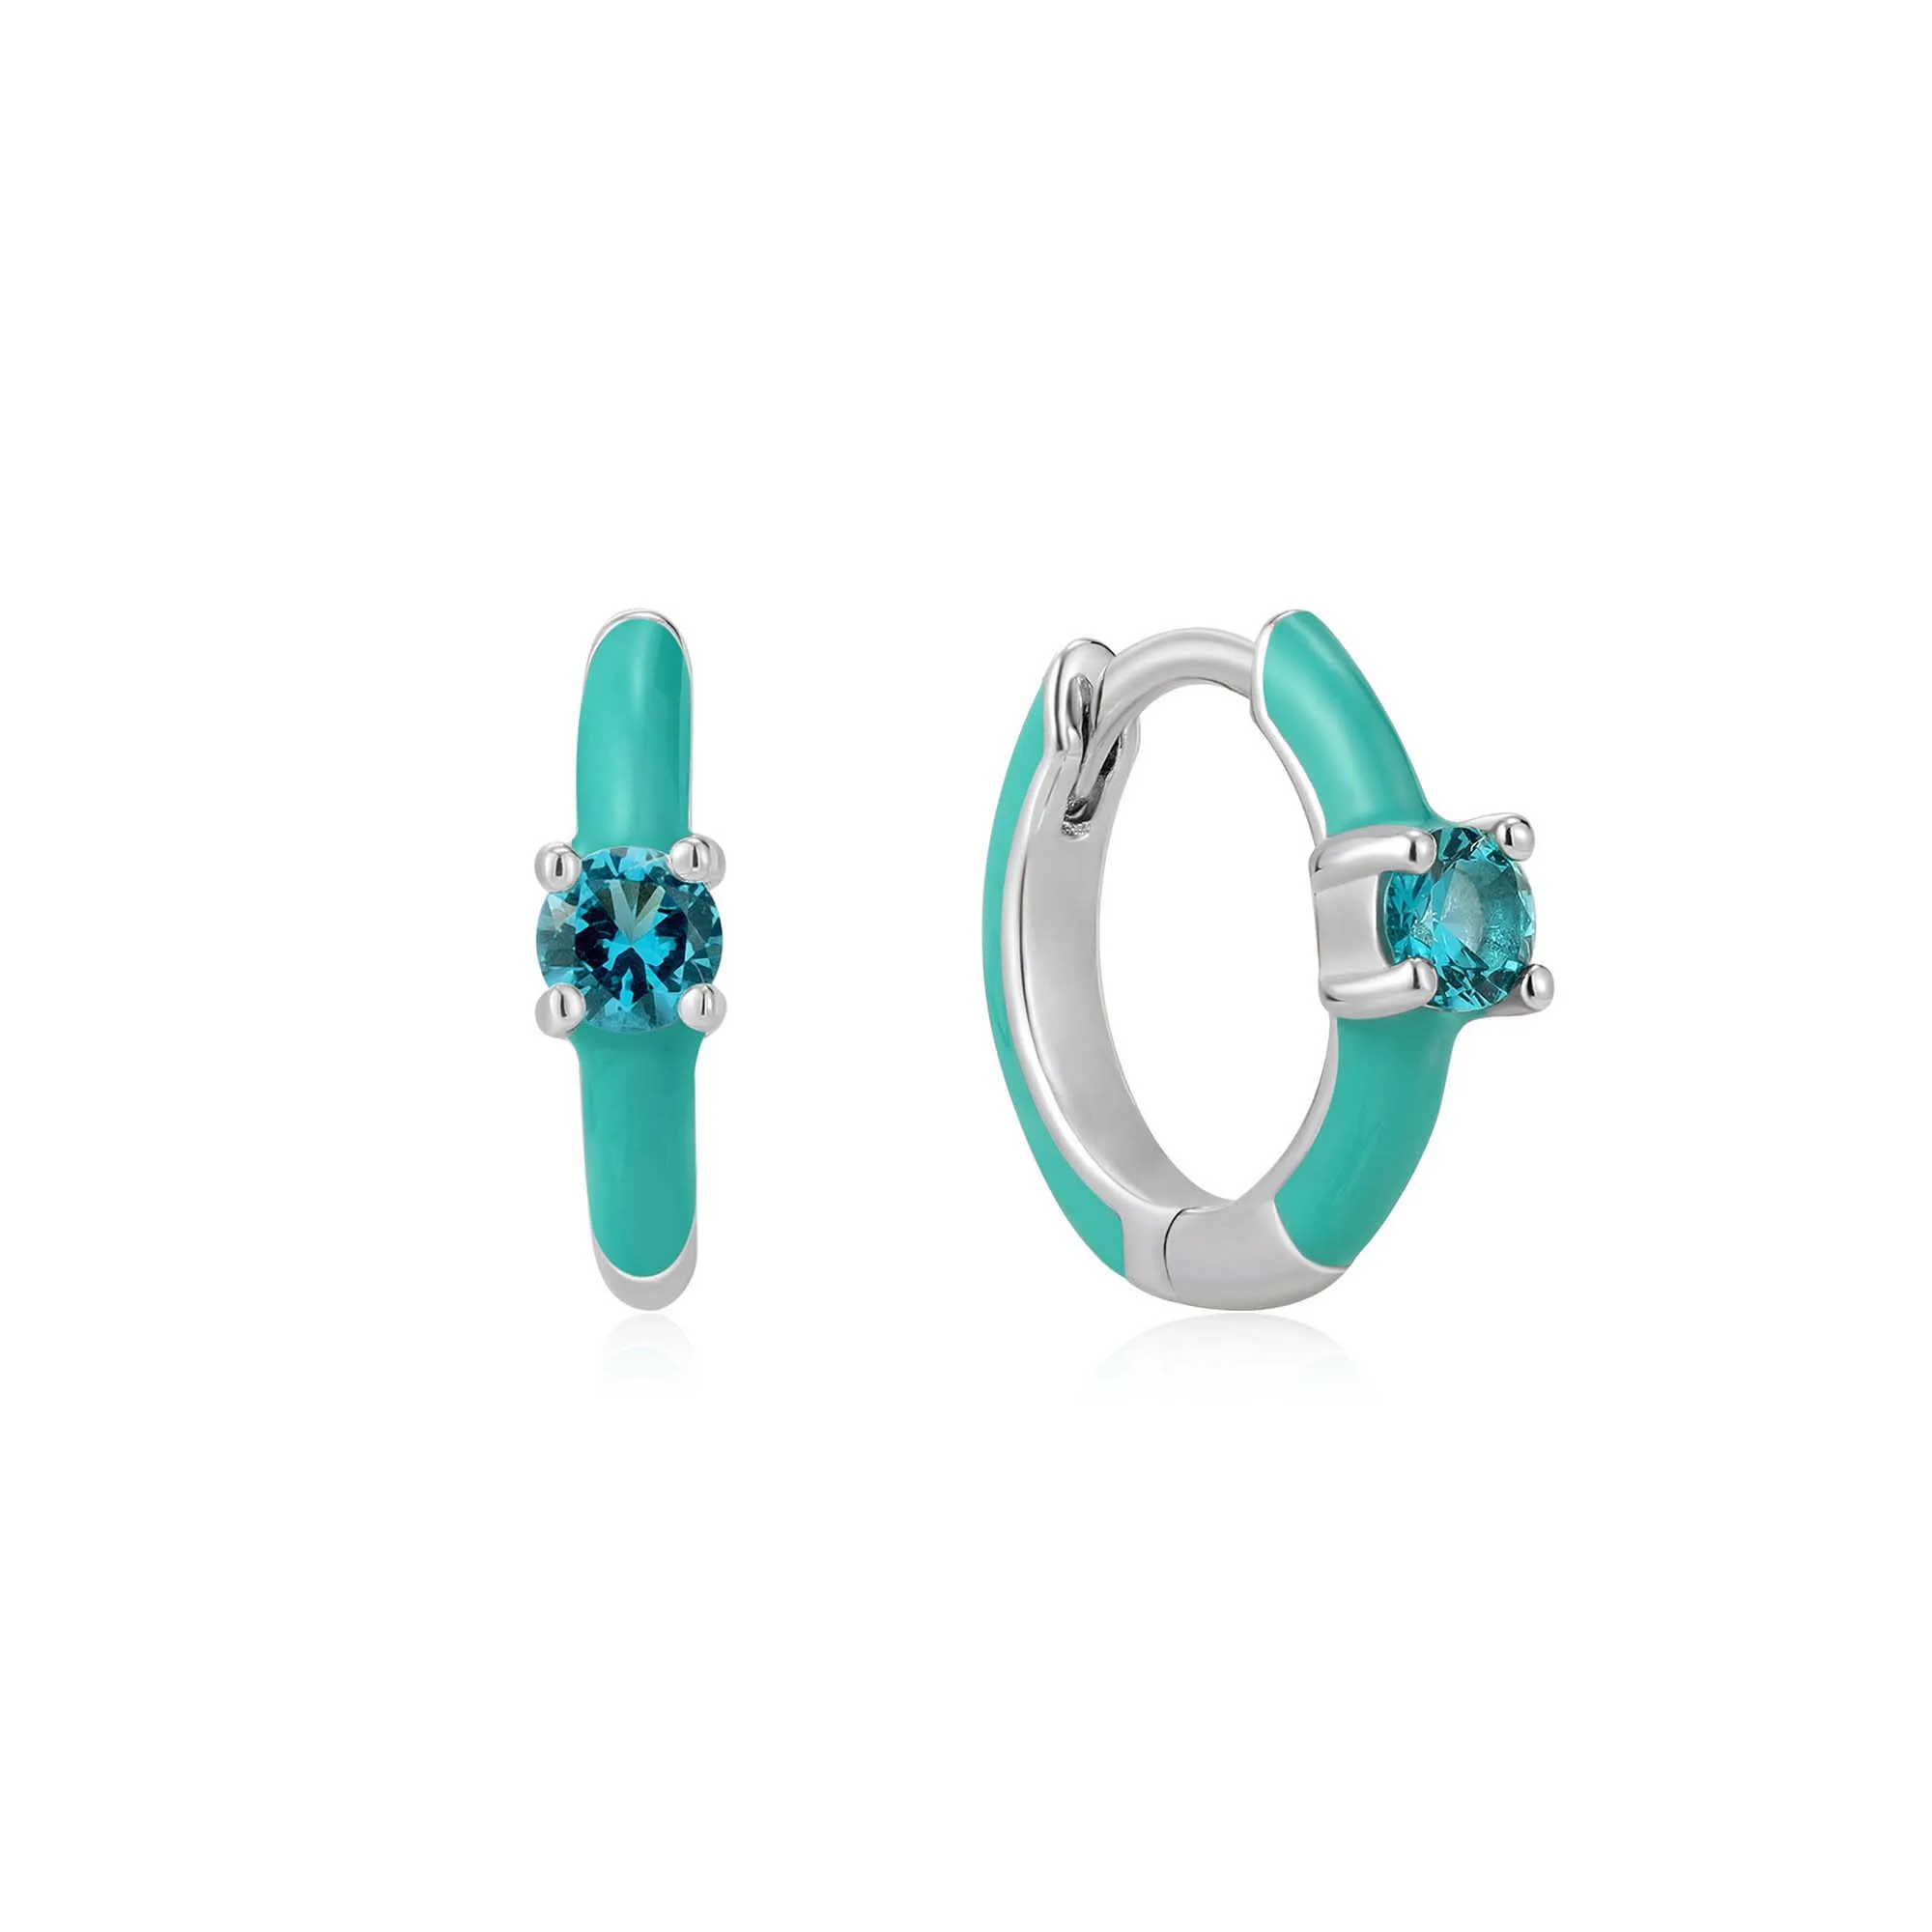 

Teal Enamel Silver Huggie Hoop Earrings With Cubic Zirconia Stone For Women Friends Luxury Quality Jewelry 2021 New Trend Gifts